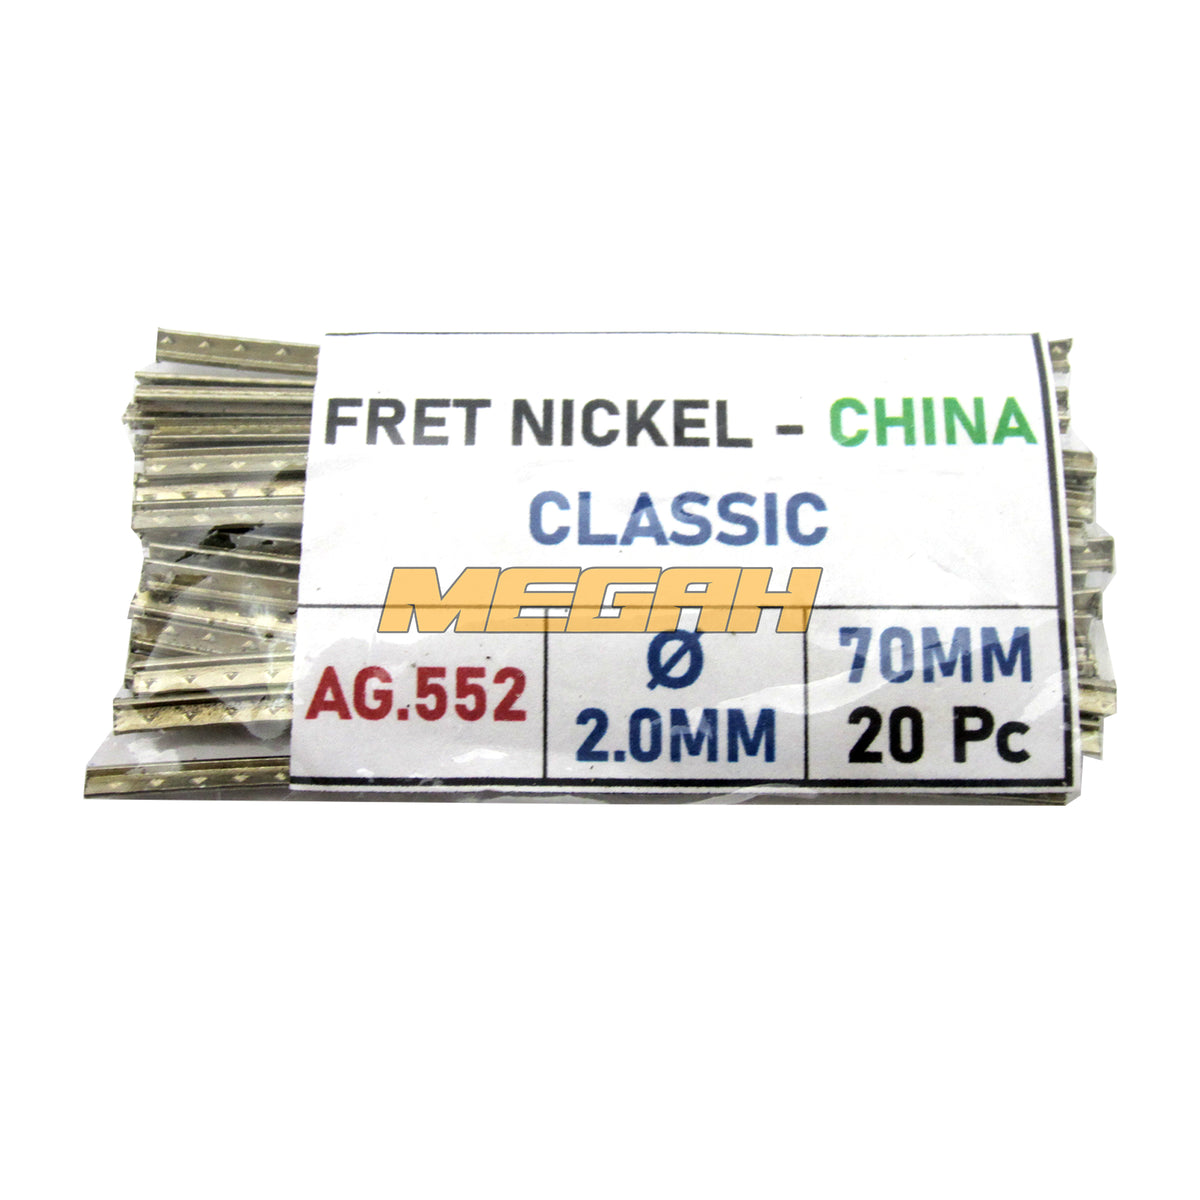 KAWAT FRET GITAR NICKEL CHINA - CLASSIC (AG552) - Megah Sport